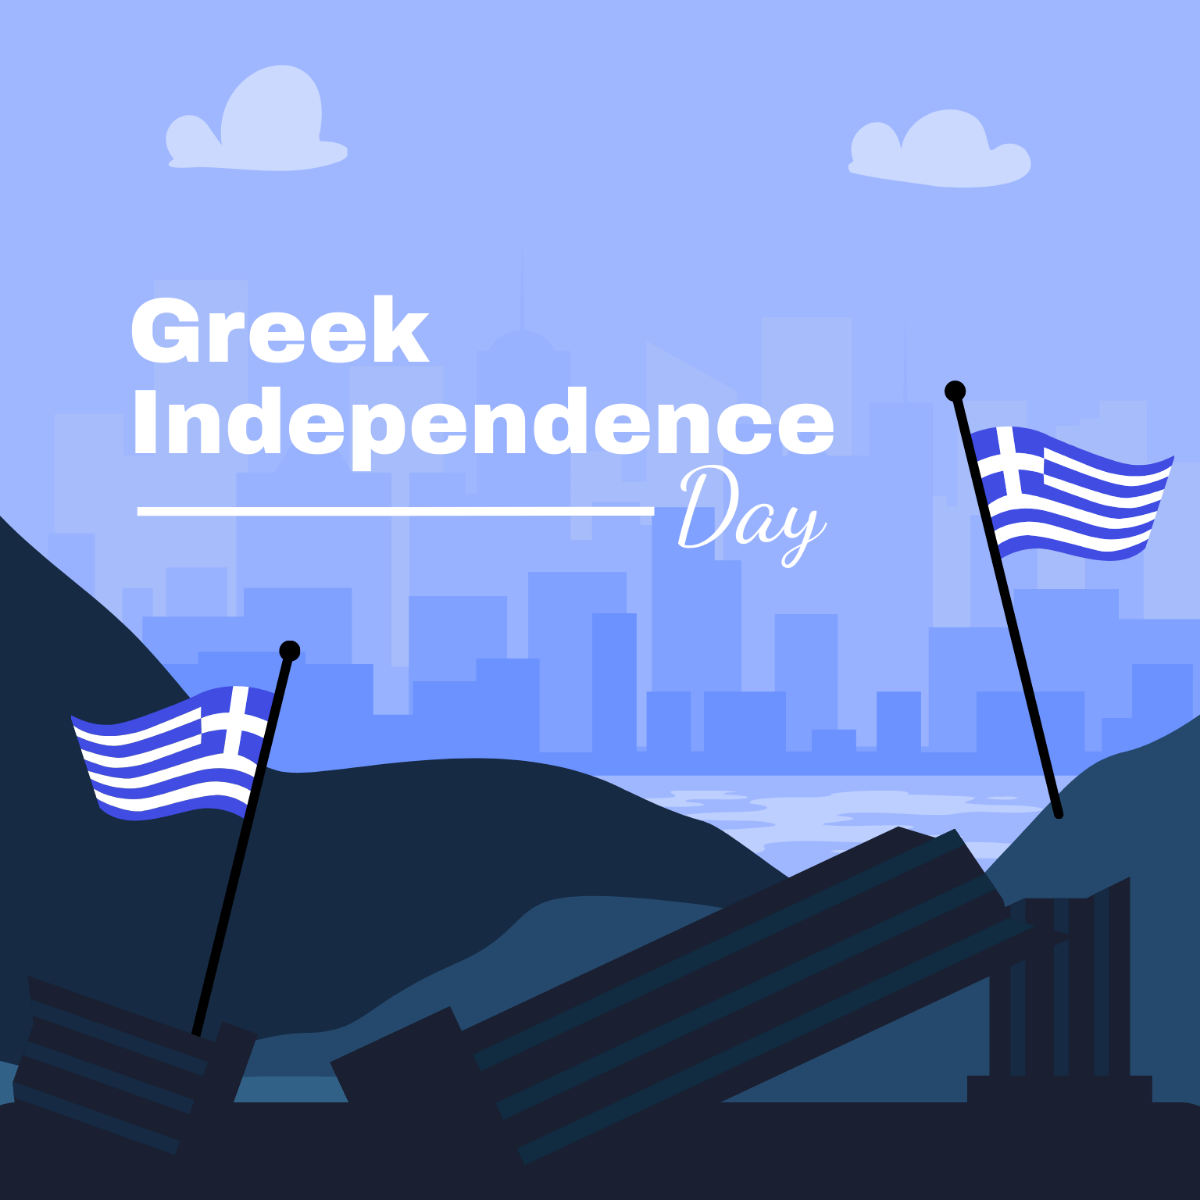 Greek Independence Day Illustration Template